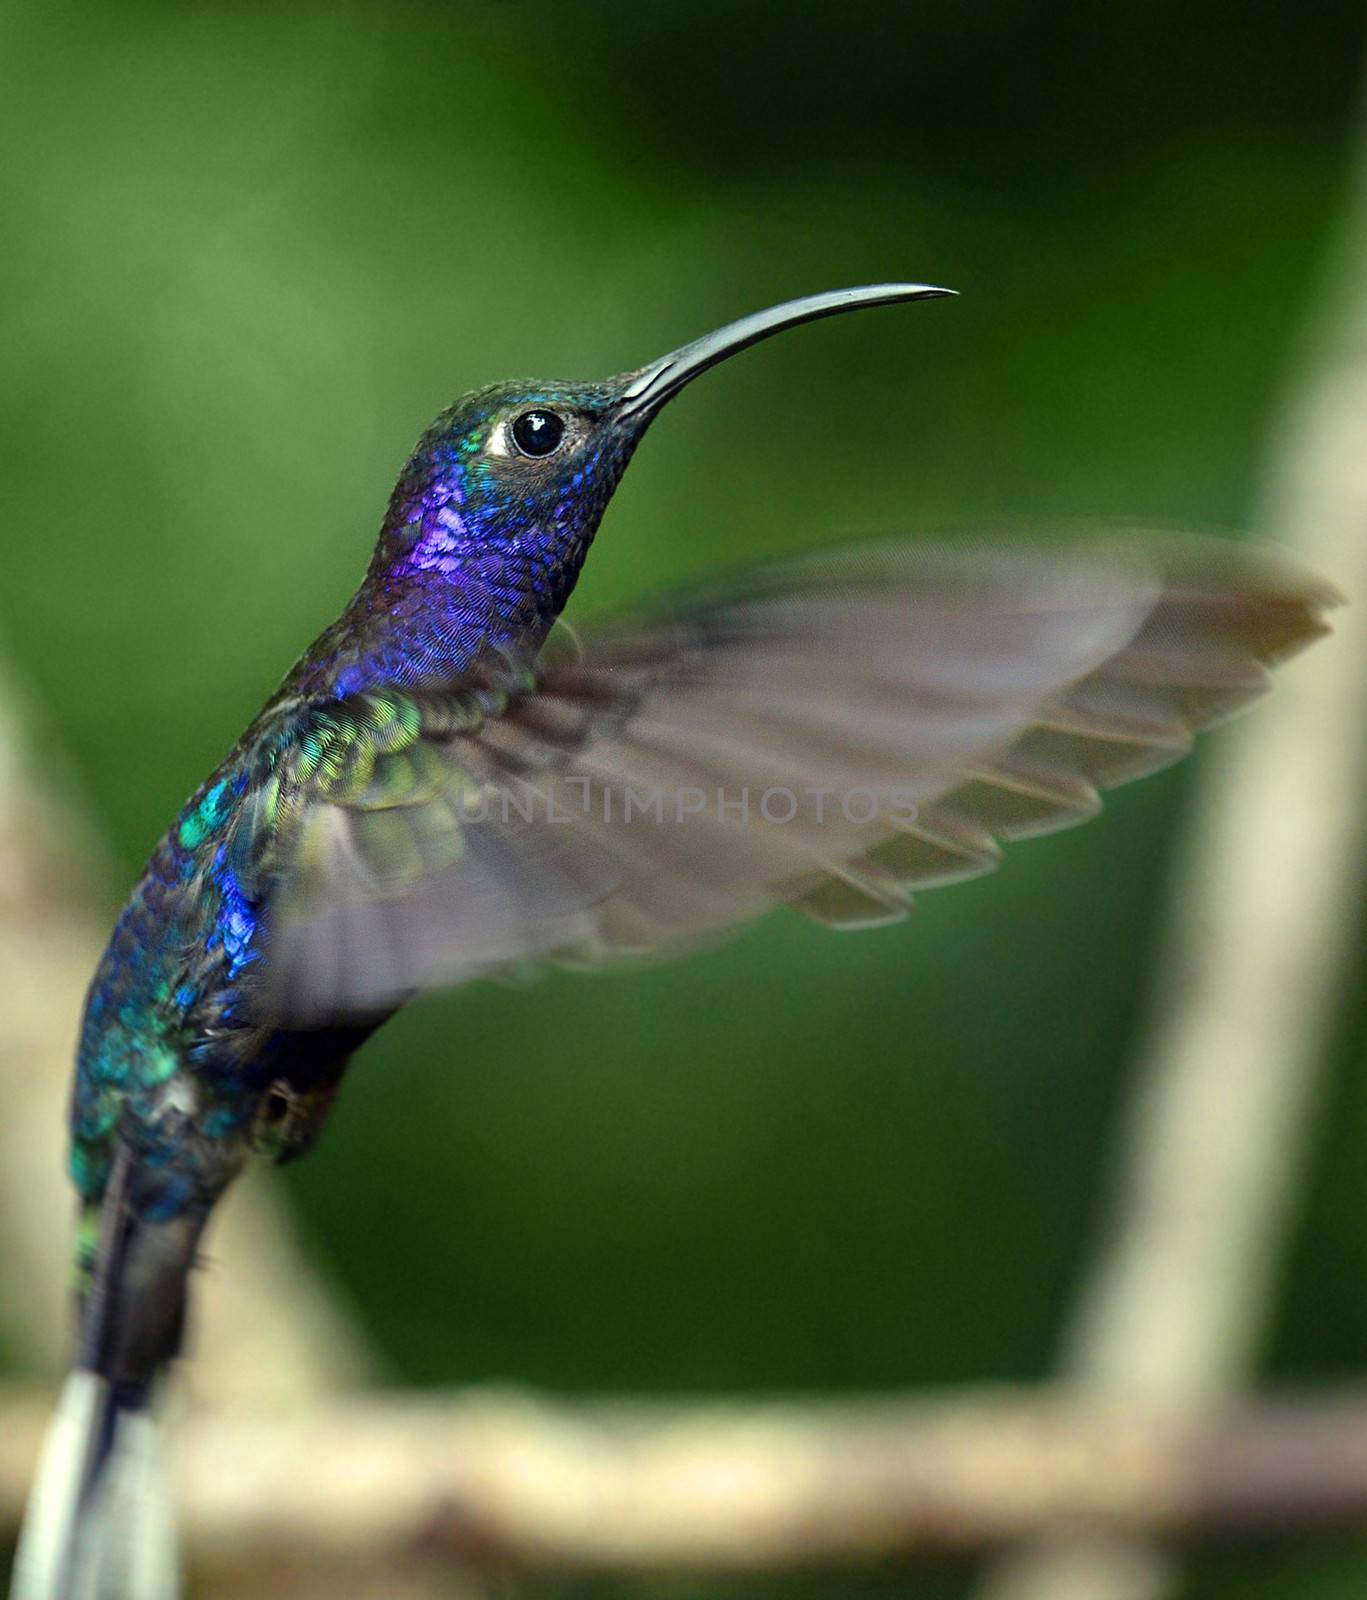 Hummingbird by dynamicfoto